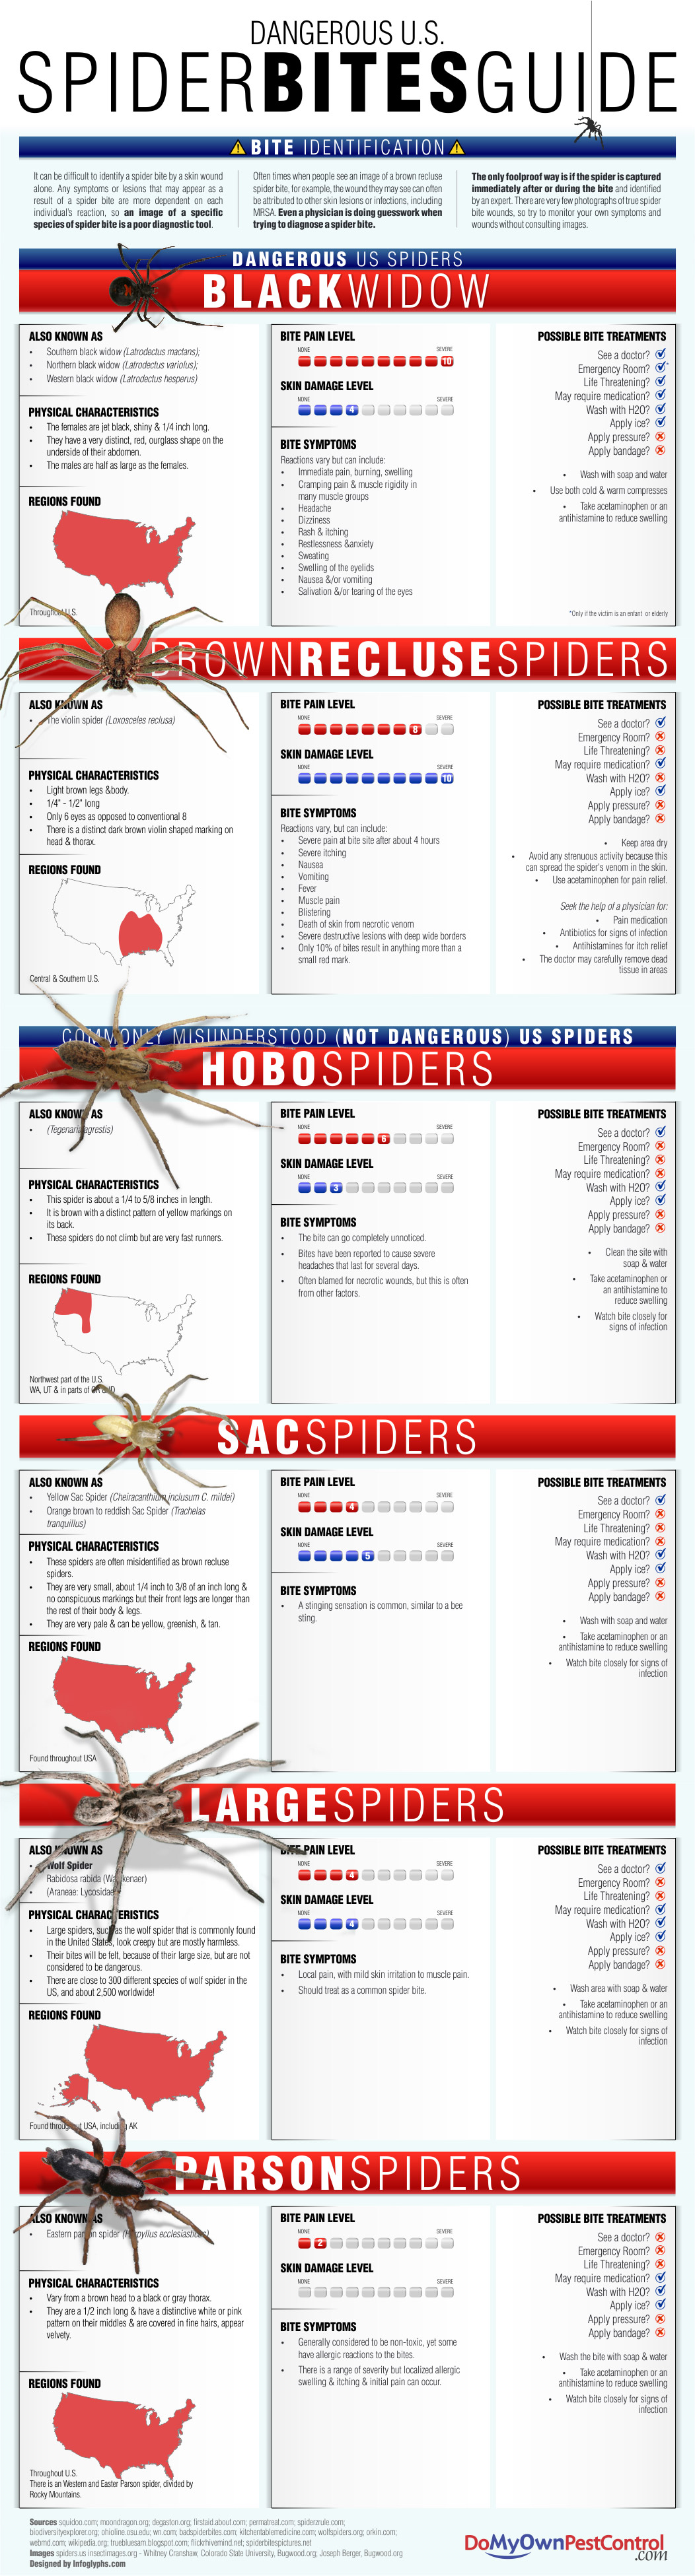 dangerous us spider bites guide